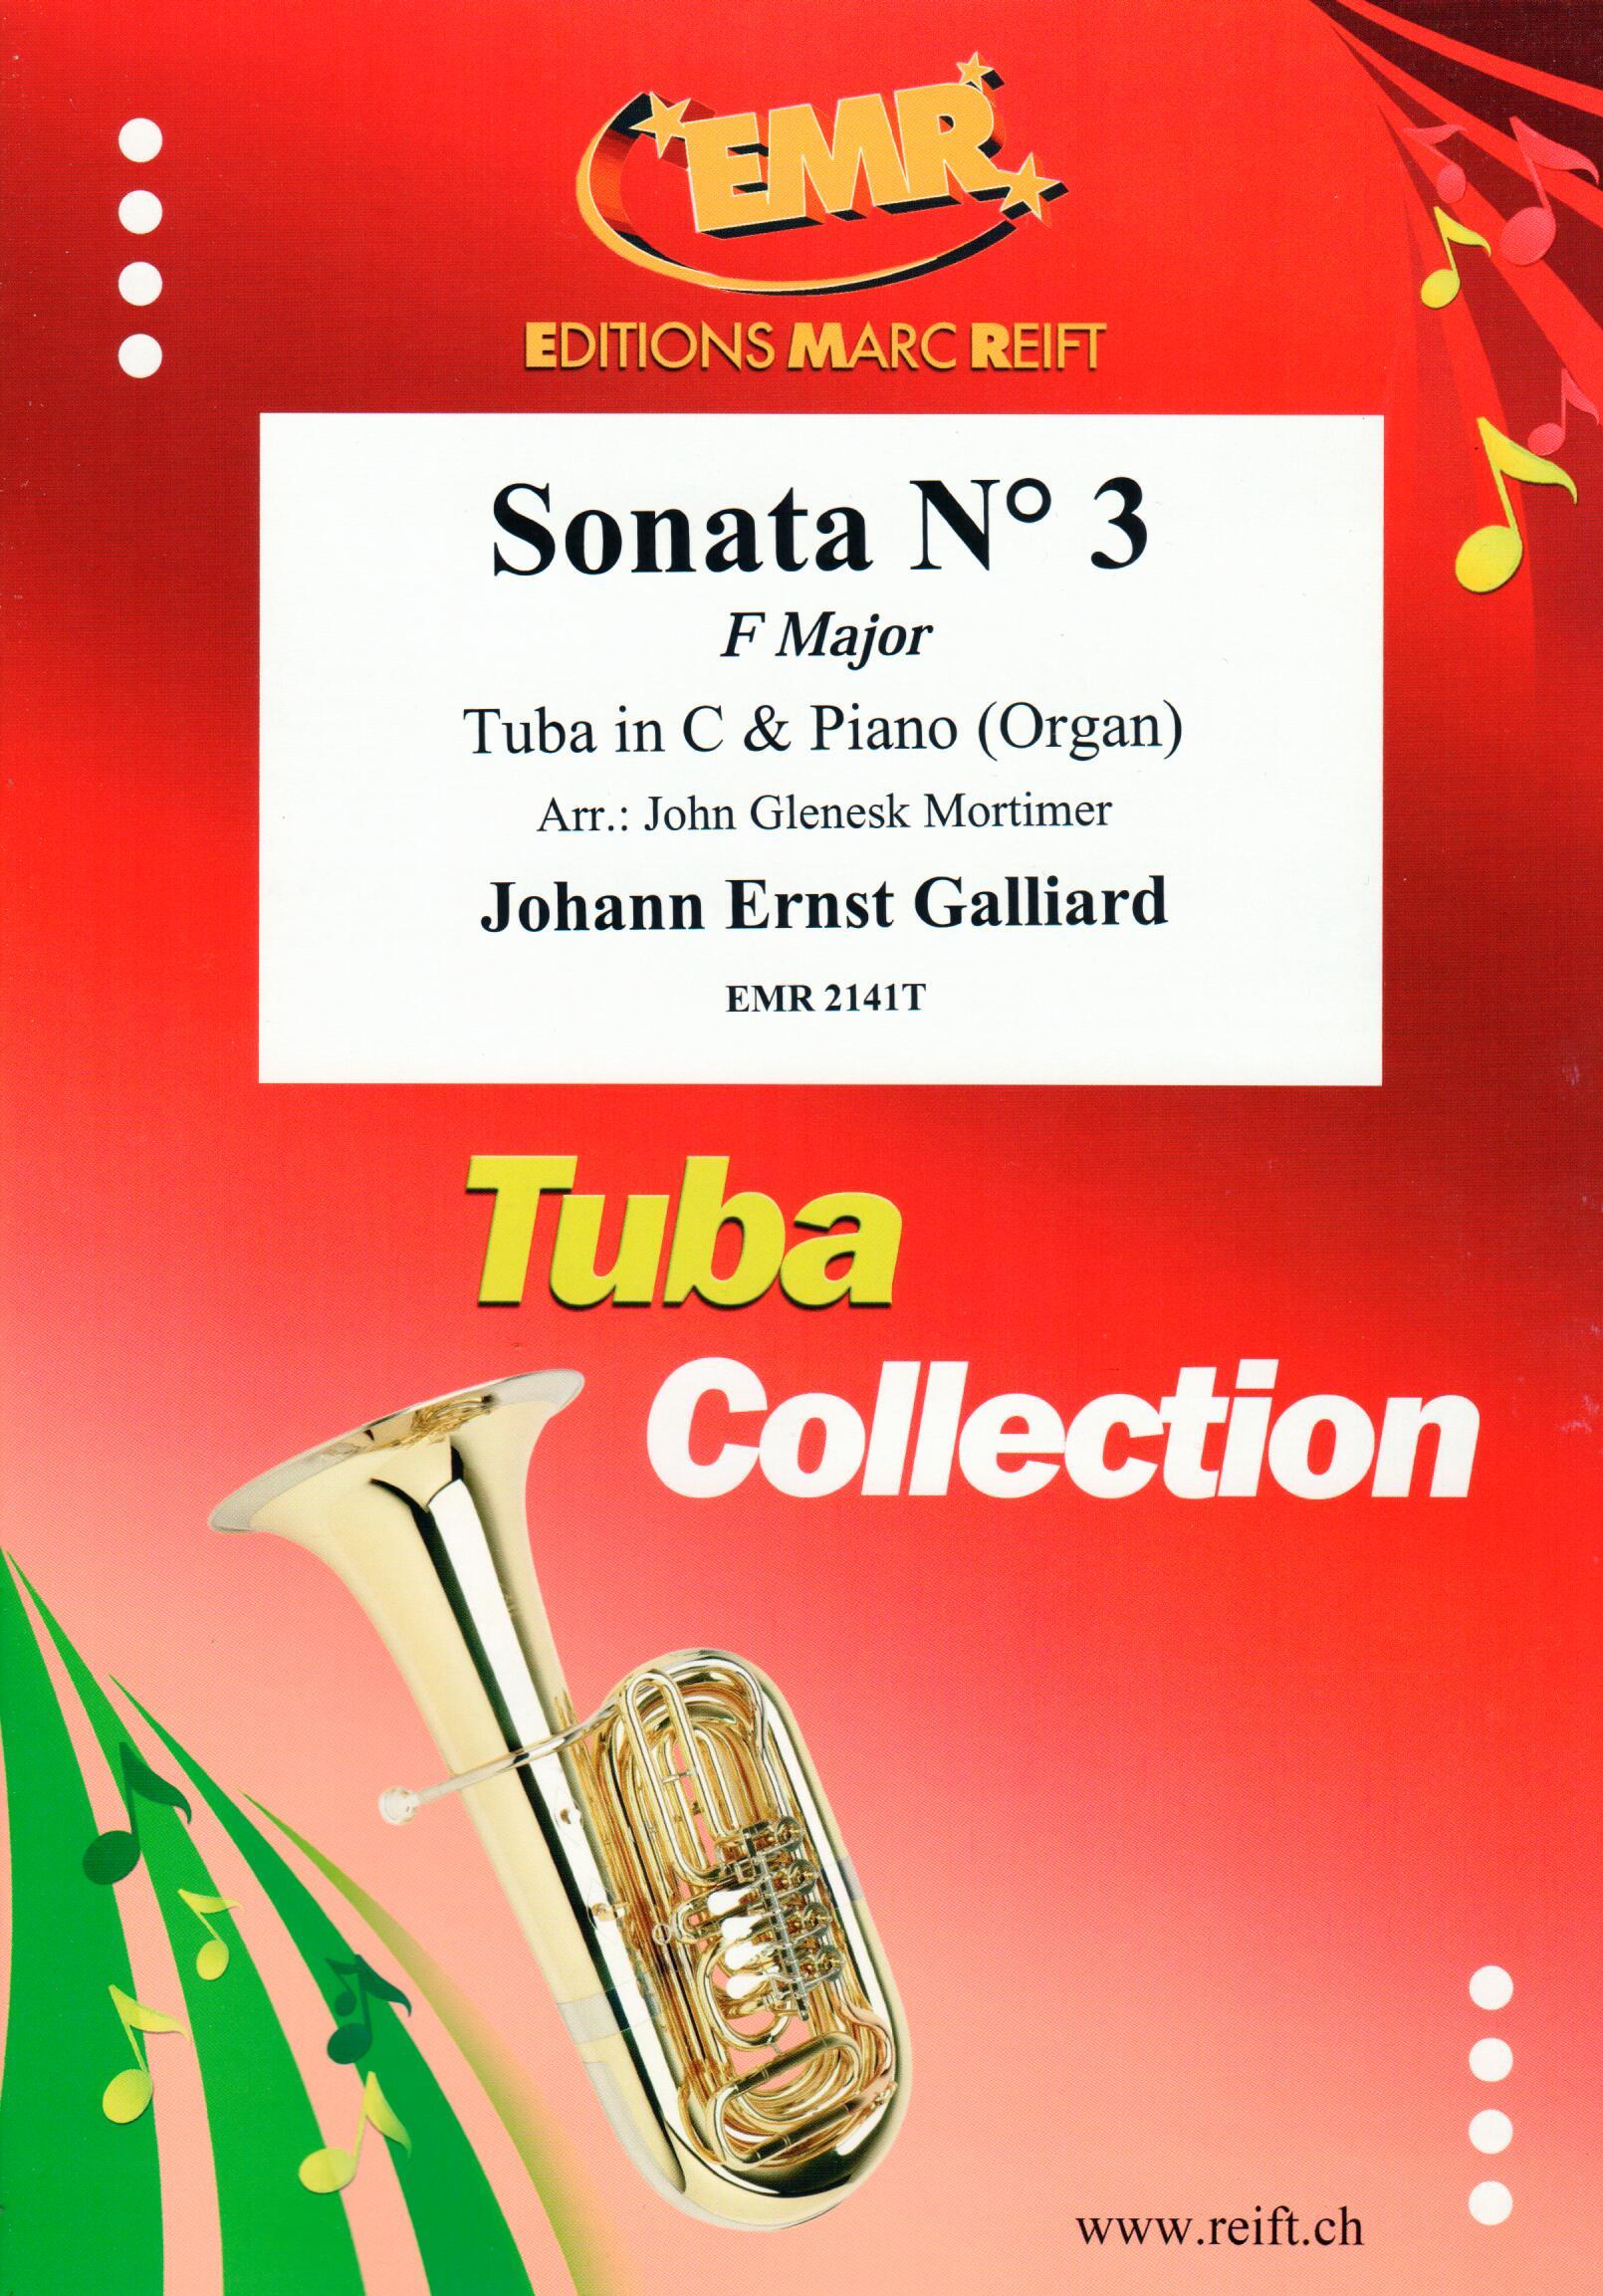 SONATA N° 3 IN F MAJOR, SOLOS - E♭. Bass